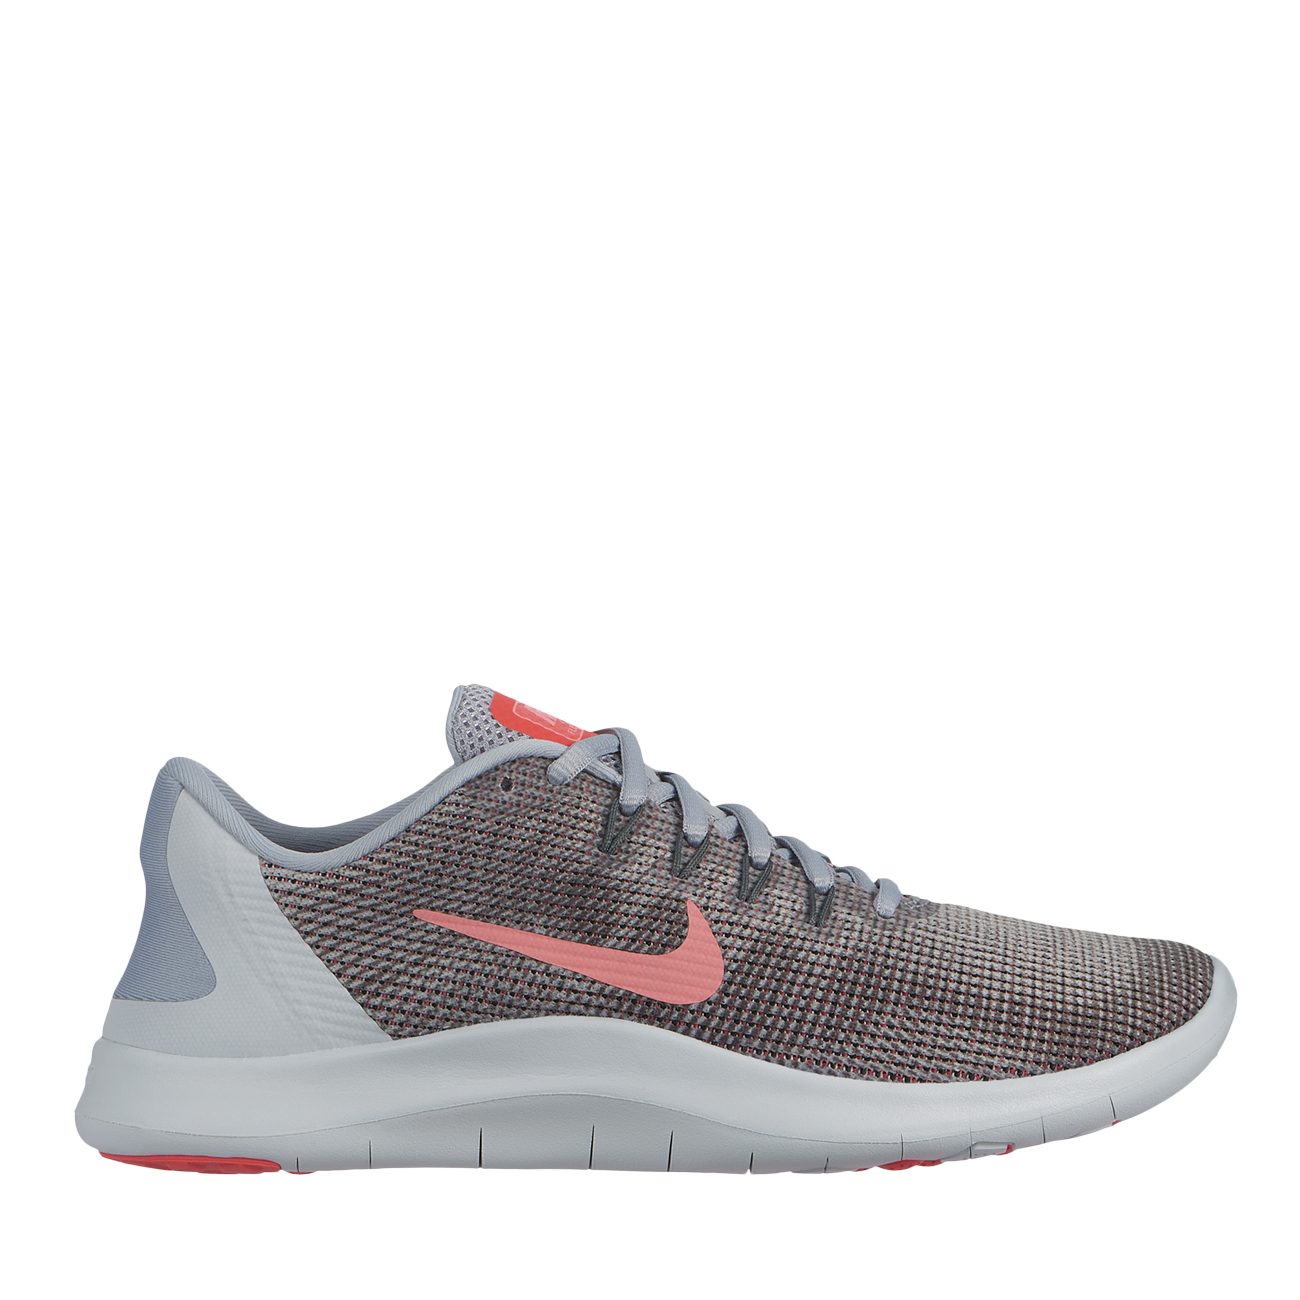 Nike Flex Runner | The Shoe Company